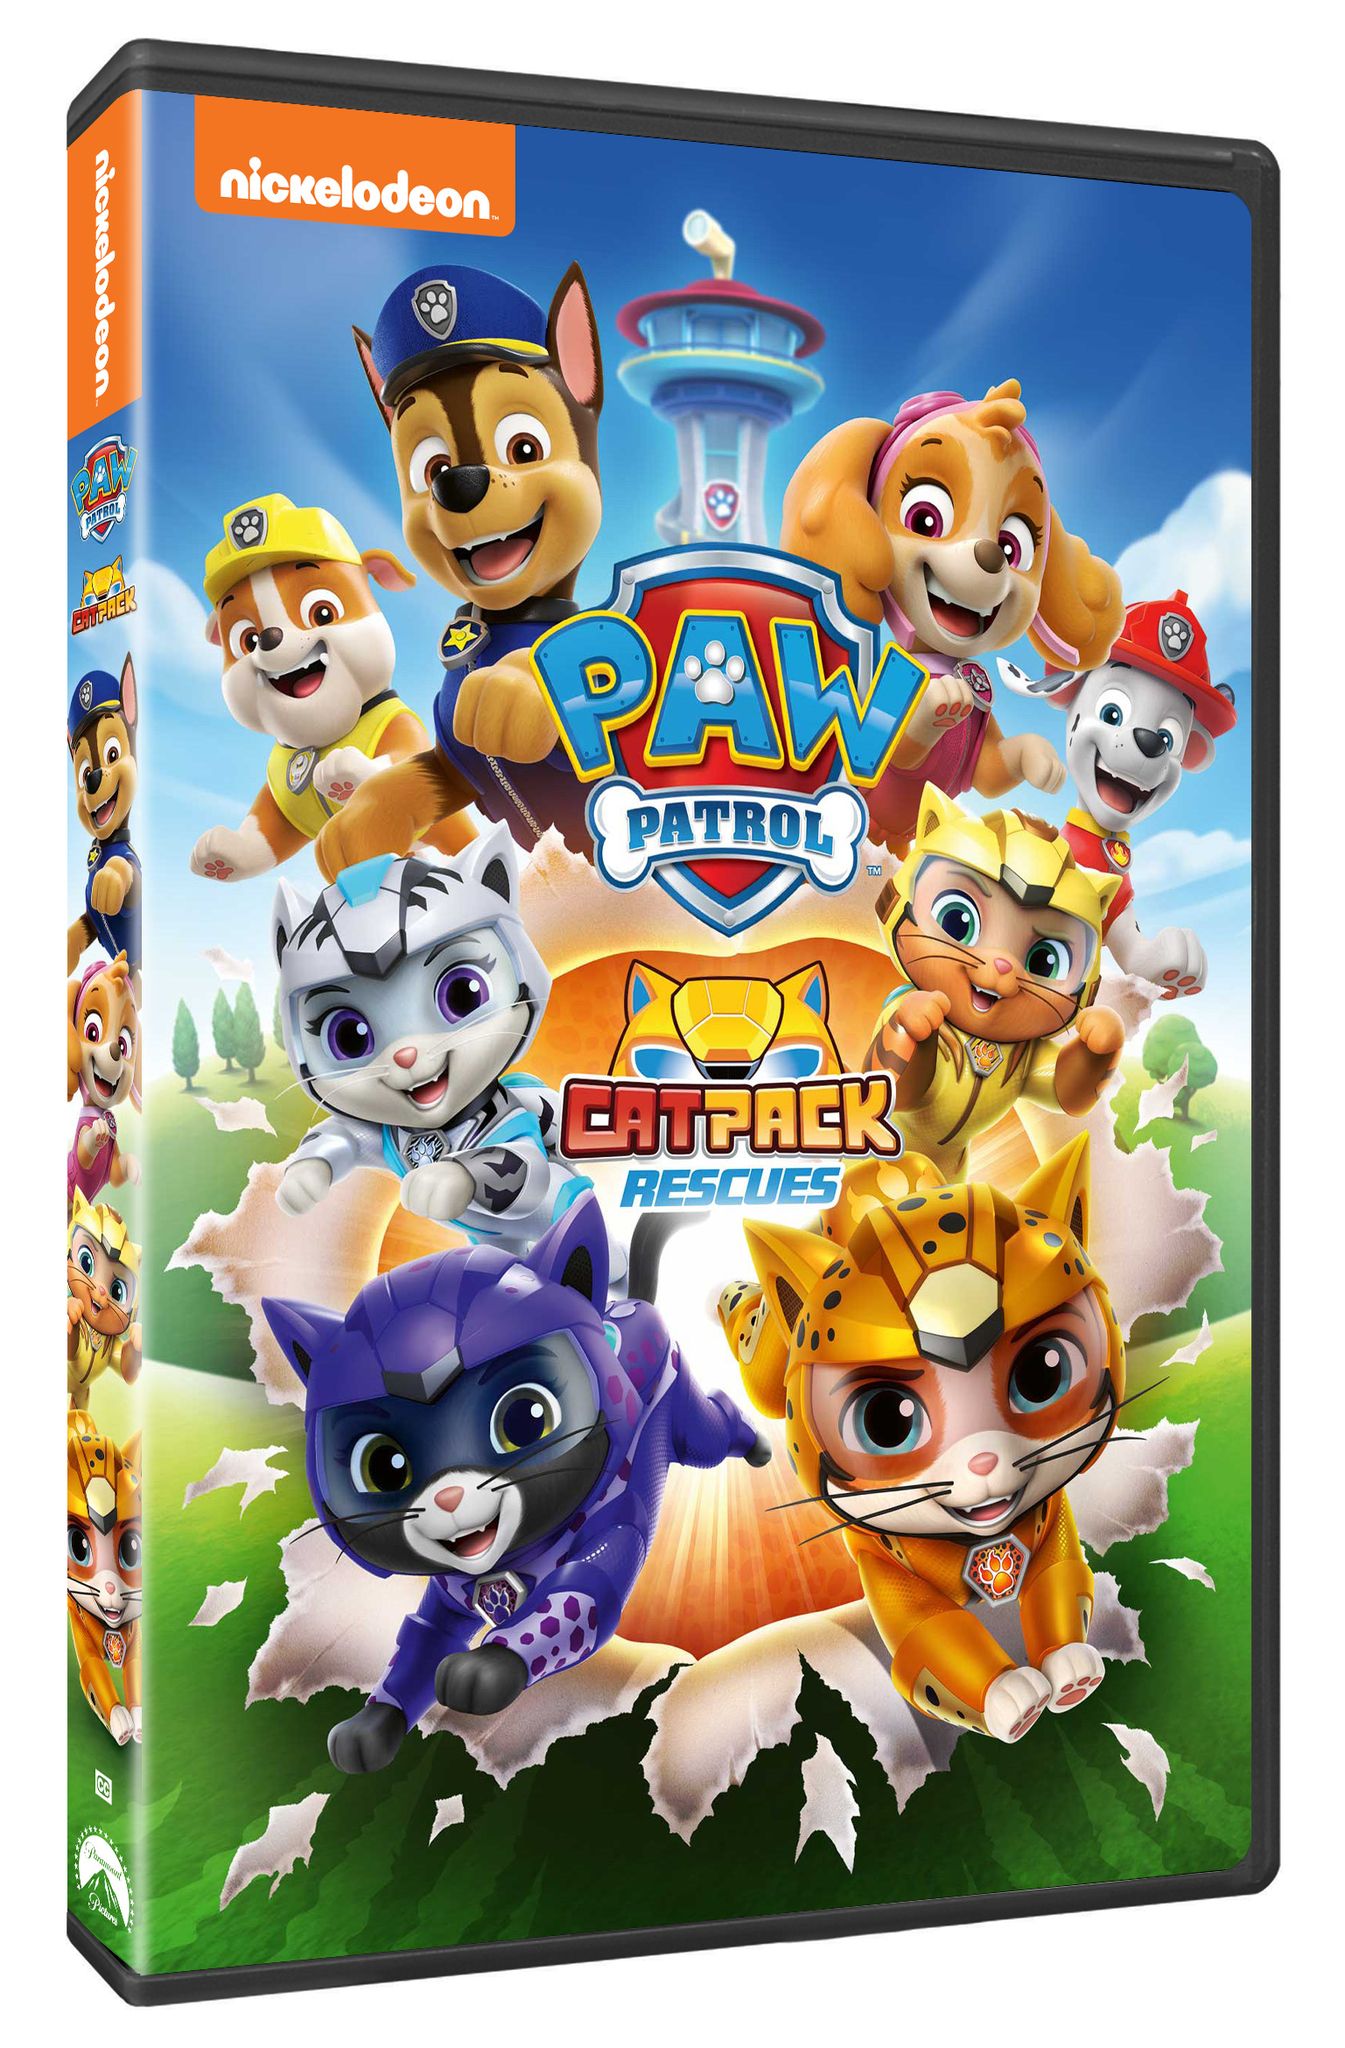 Paw Patrol Cat Pack Rescues DVD